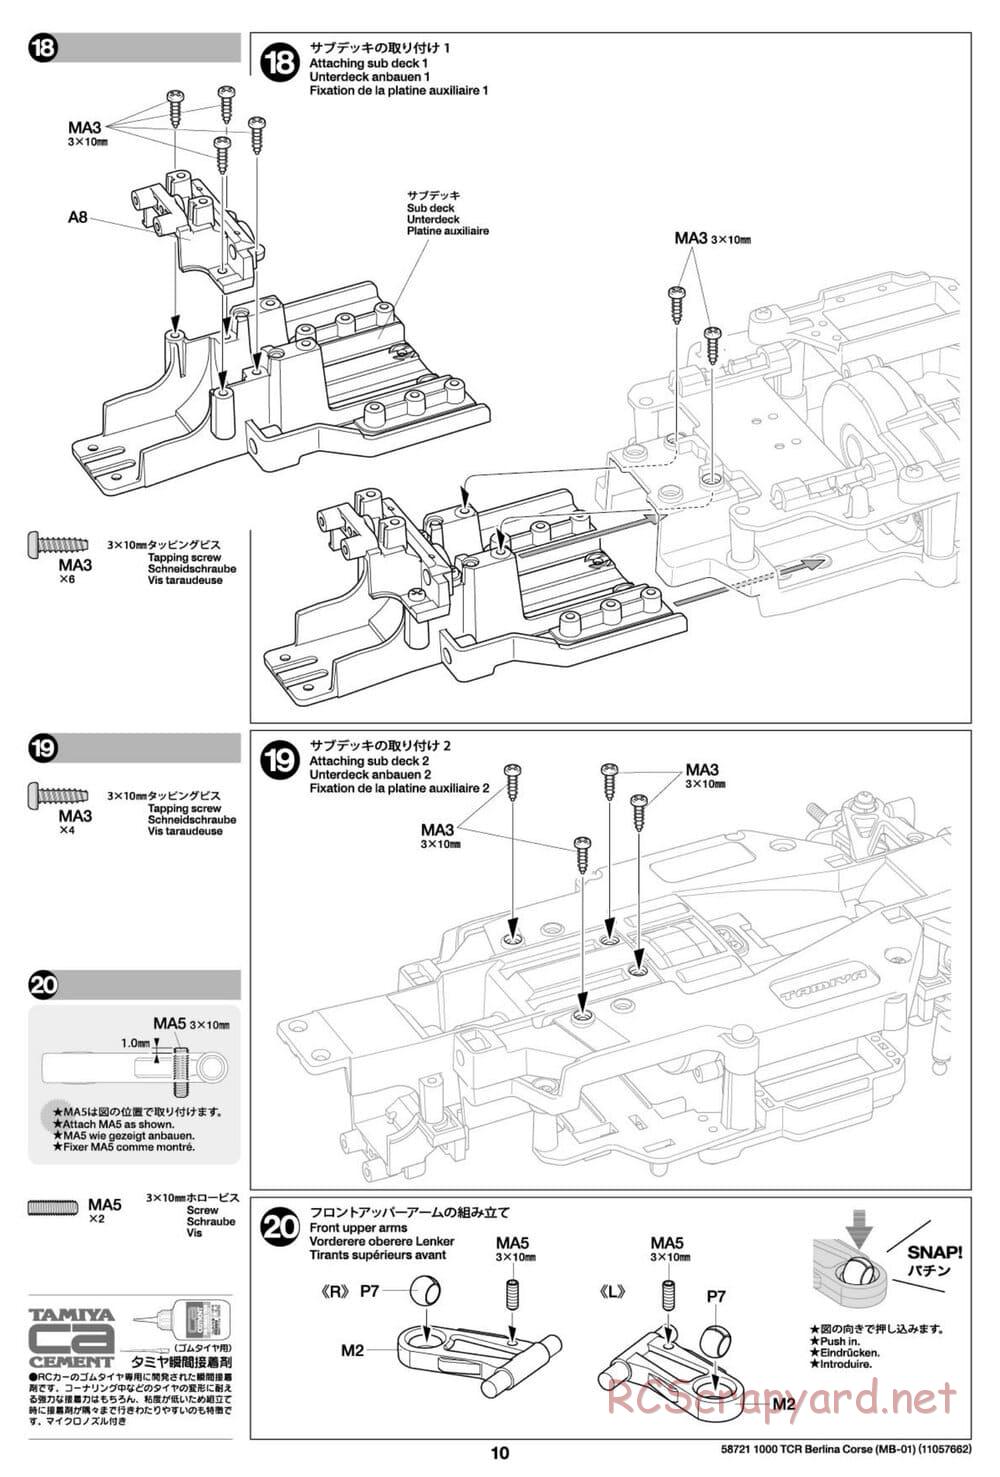 Tamiya - Fiat Abarth 1000 TCR Berlina Corsa - MB-01 Chassis - Manual - Page 10